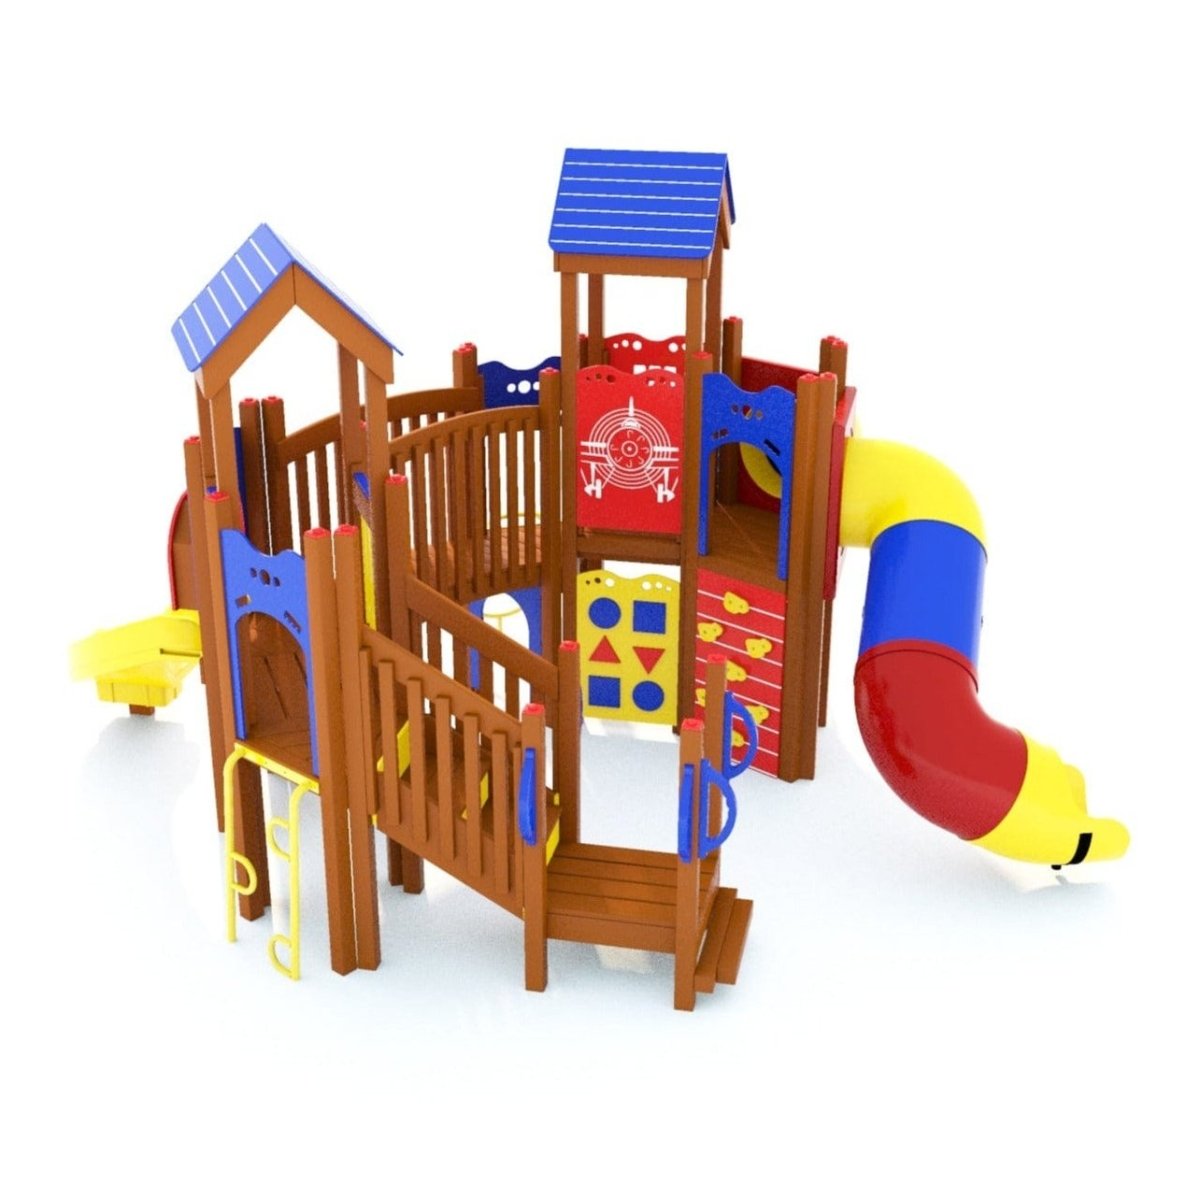 Velocity Playset - Preschool Playgrounds - Playtopia, Inc.